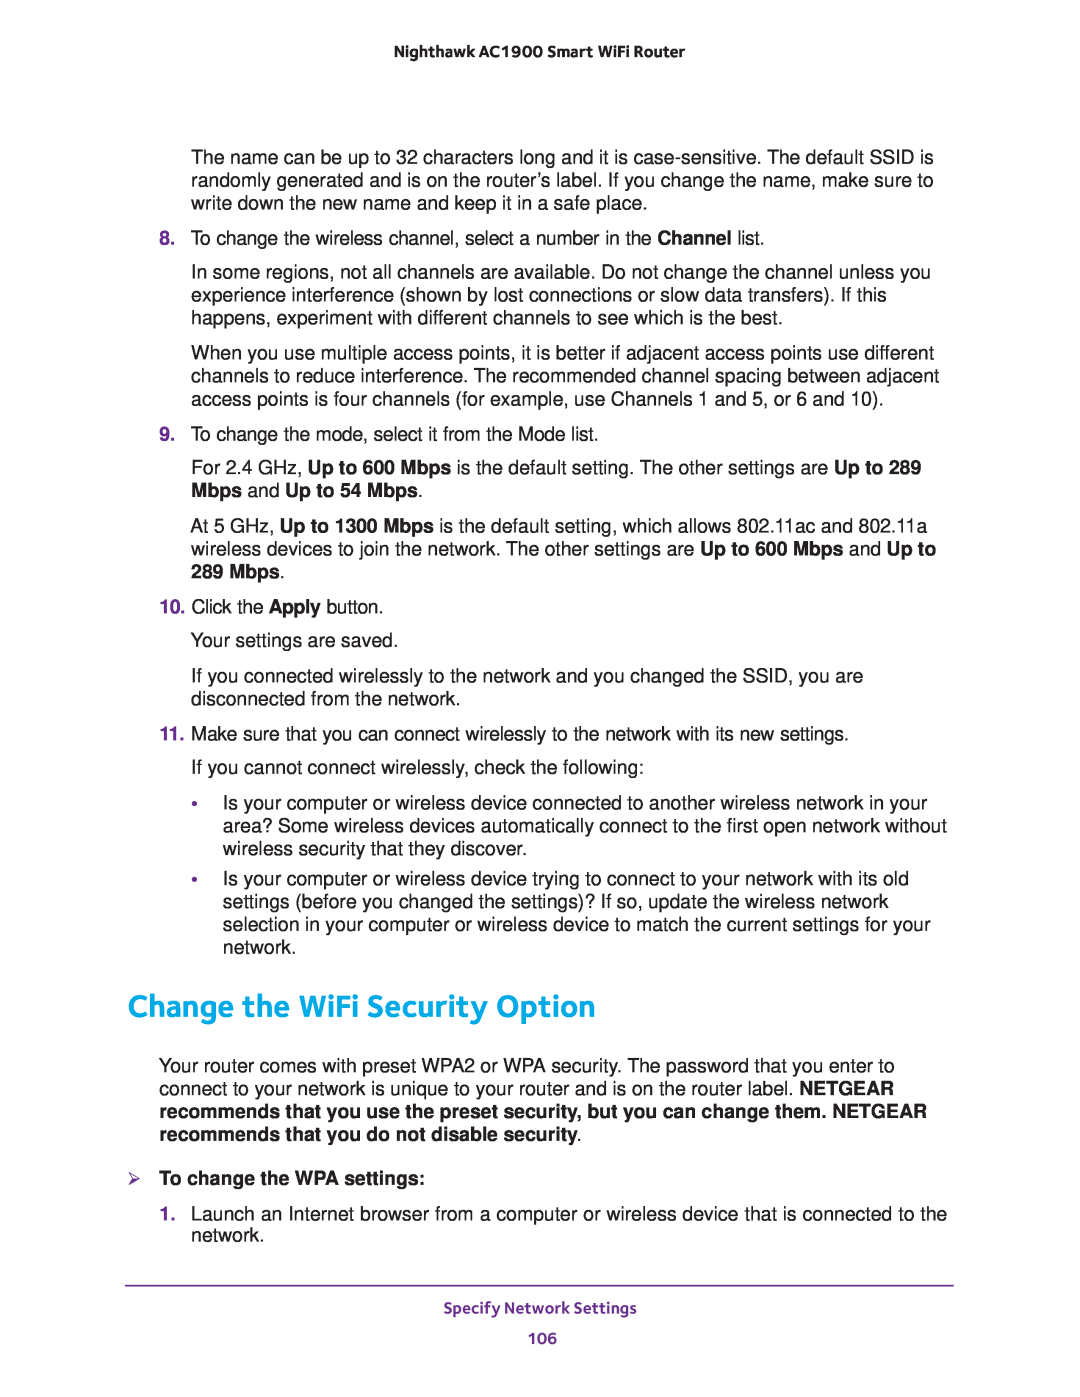 NETGEAR Model R7000 user manual Change the WiFi Security Option,  To change the WPA settings 